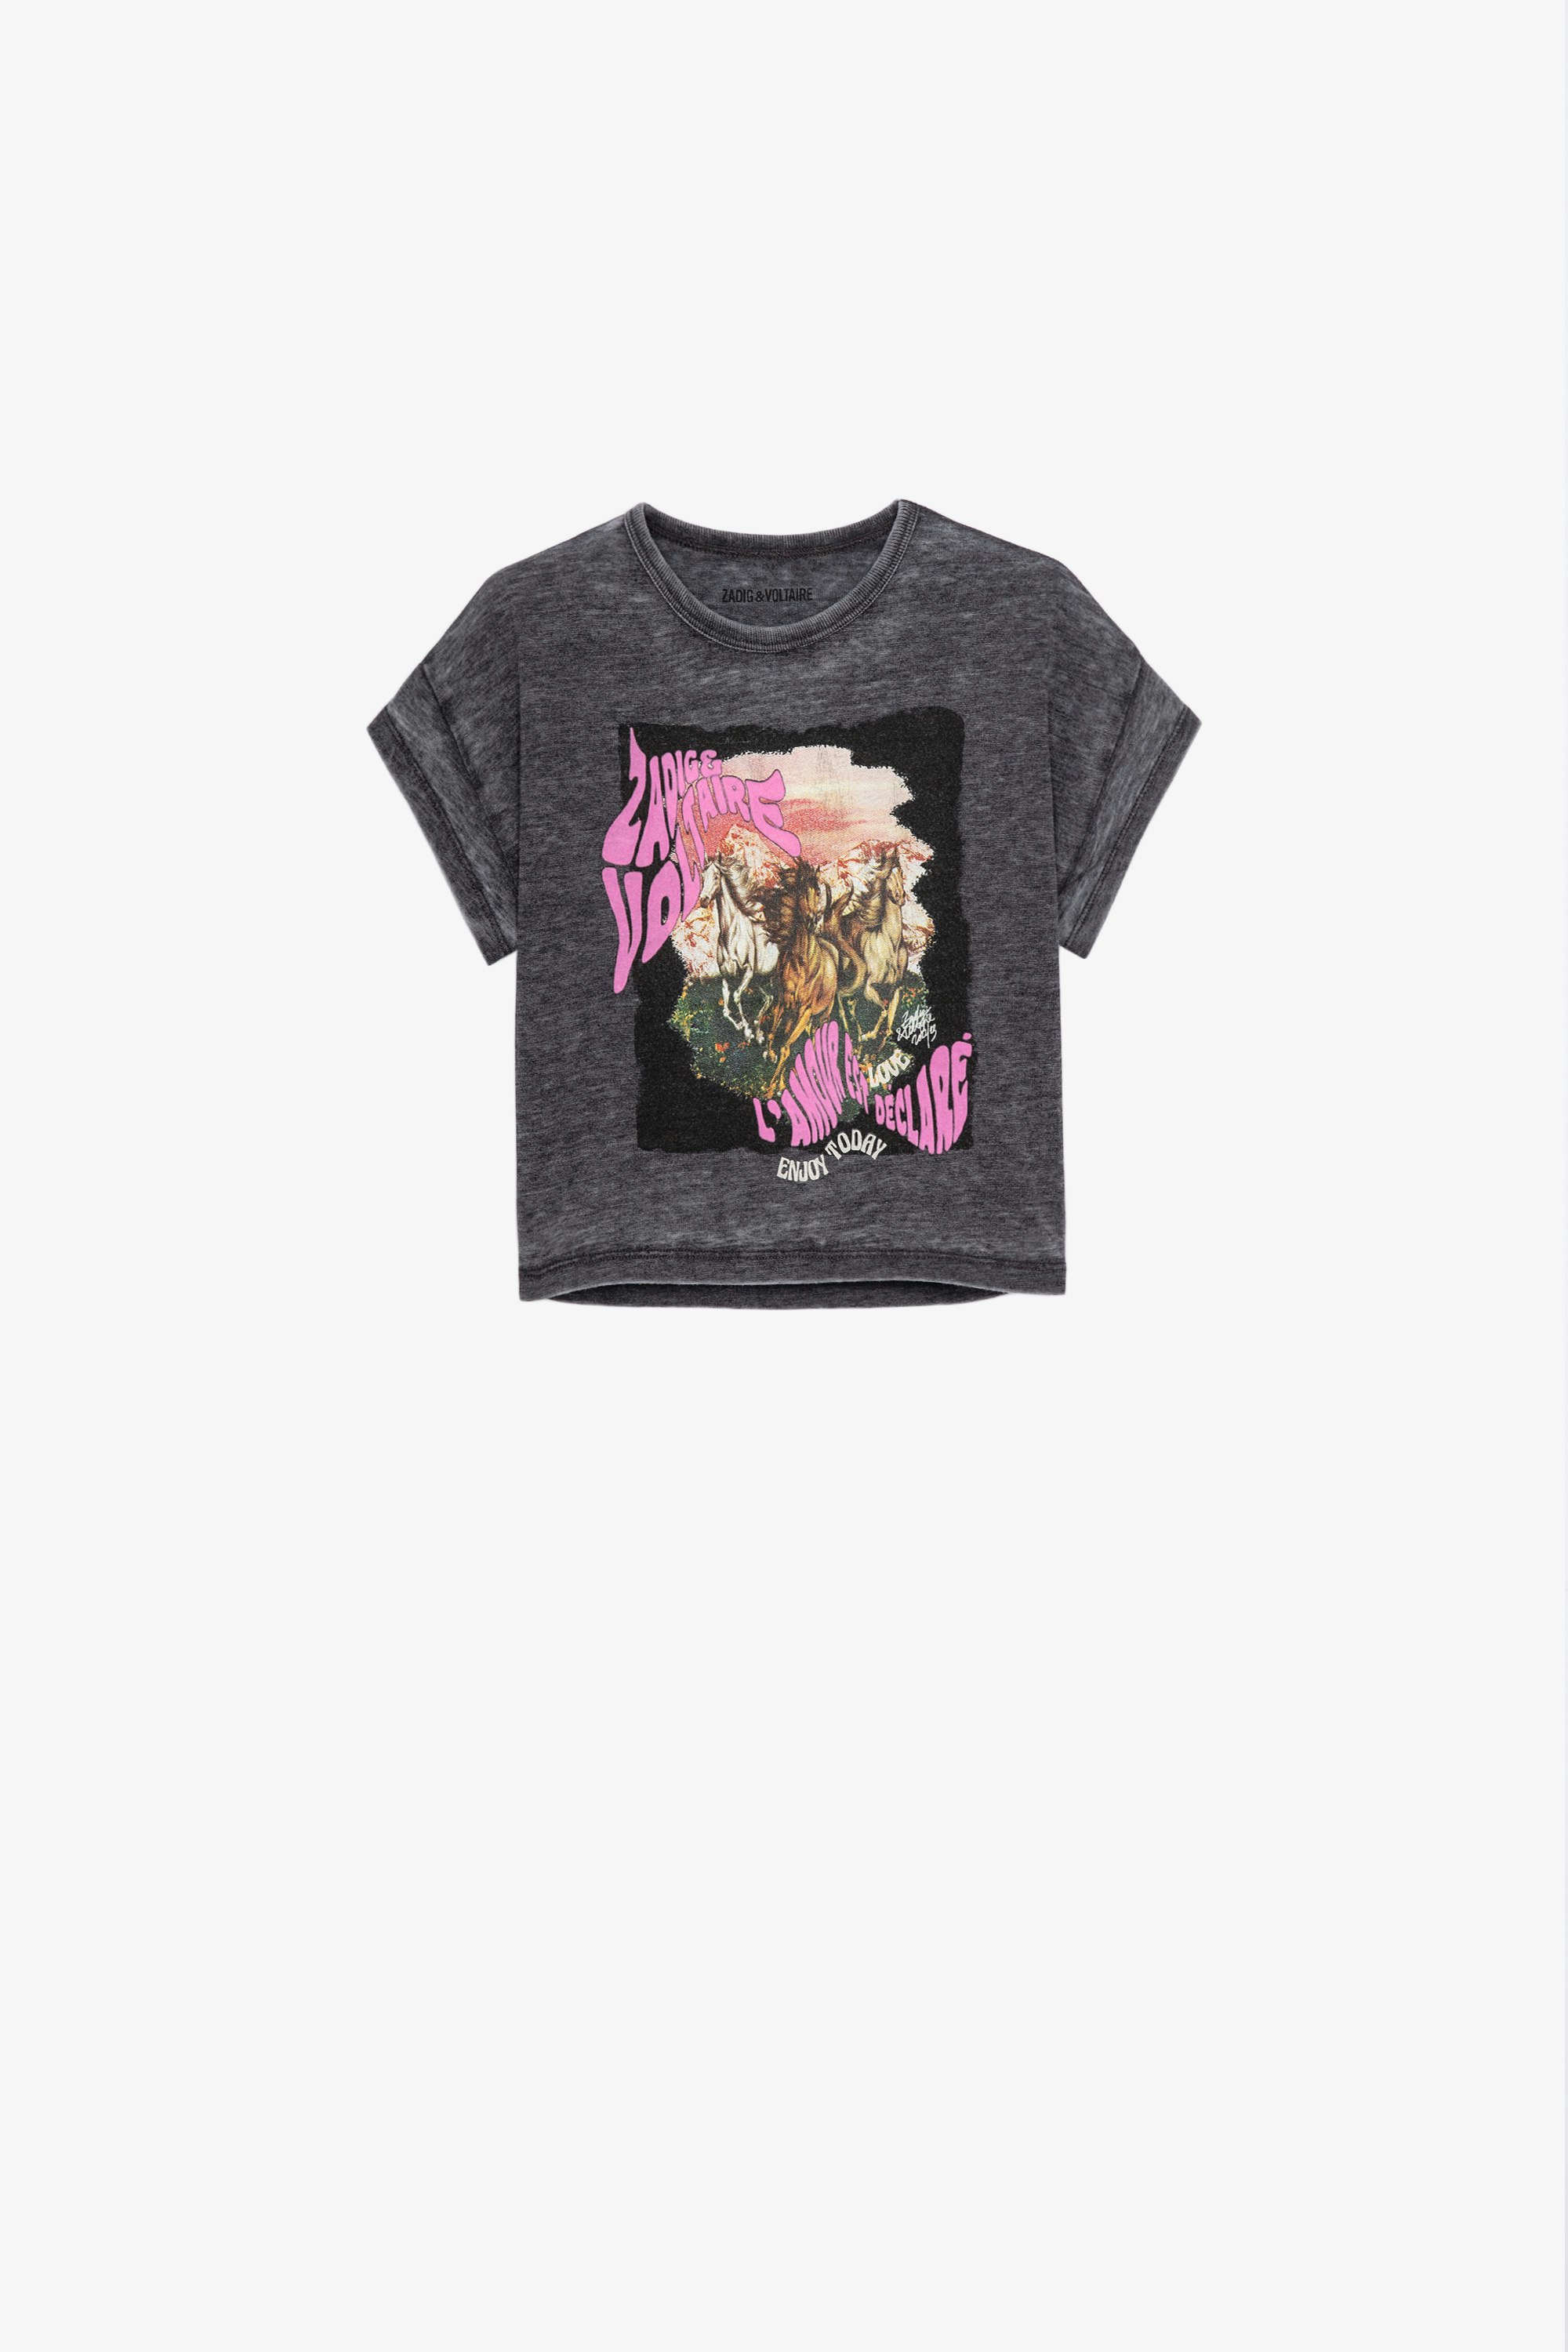 Camiseta Chloe Infantil  Camiseta gris de manga corta infantil con estampado de caballos 